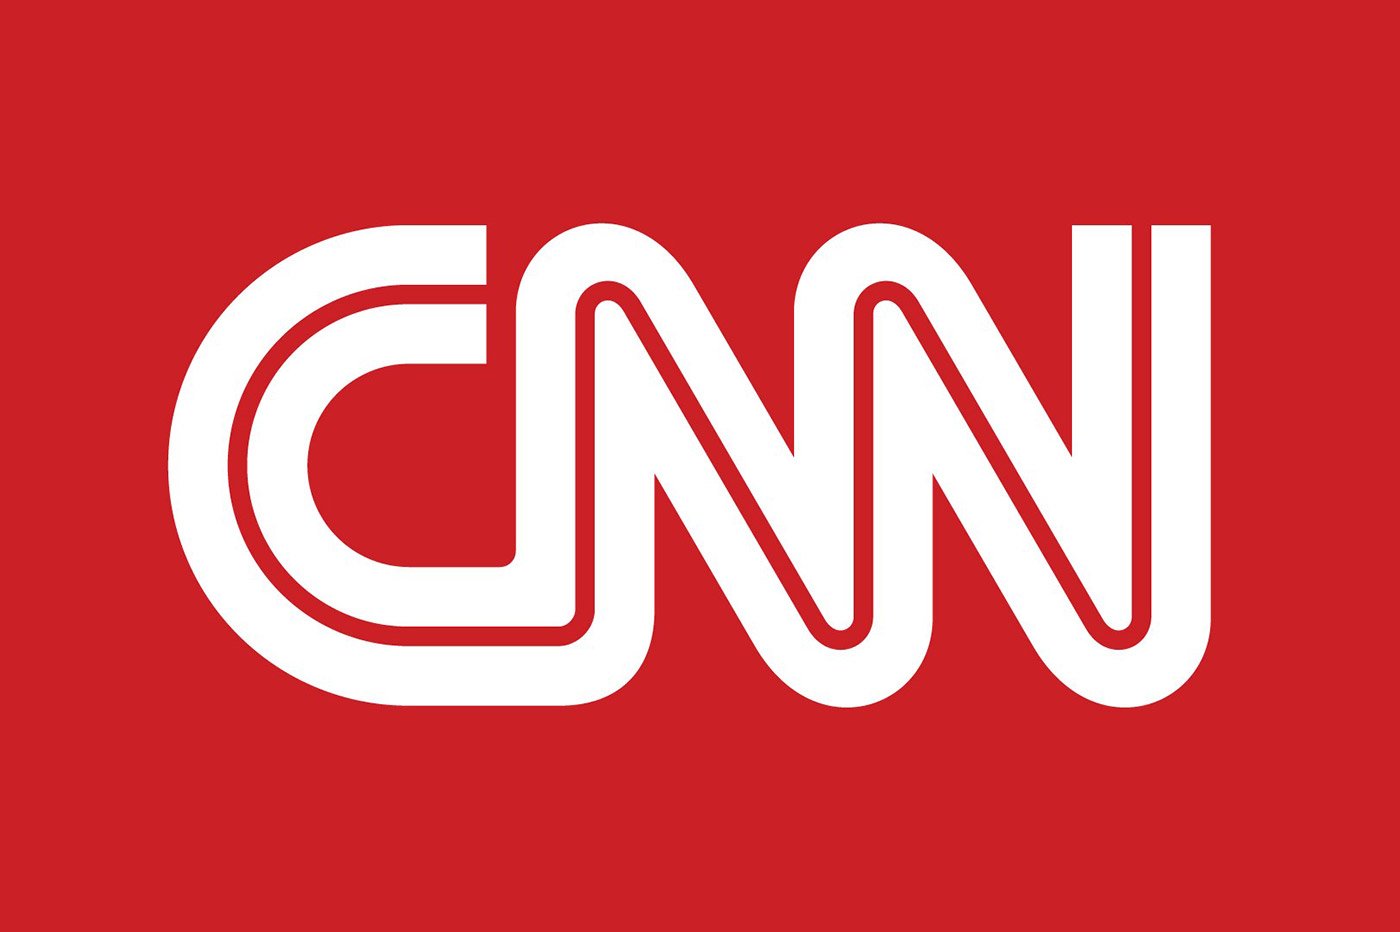 cnn-logo-white-on-red.jpeg